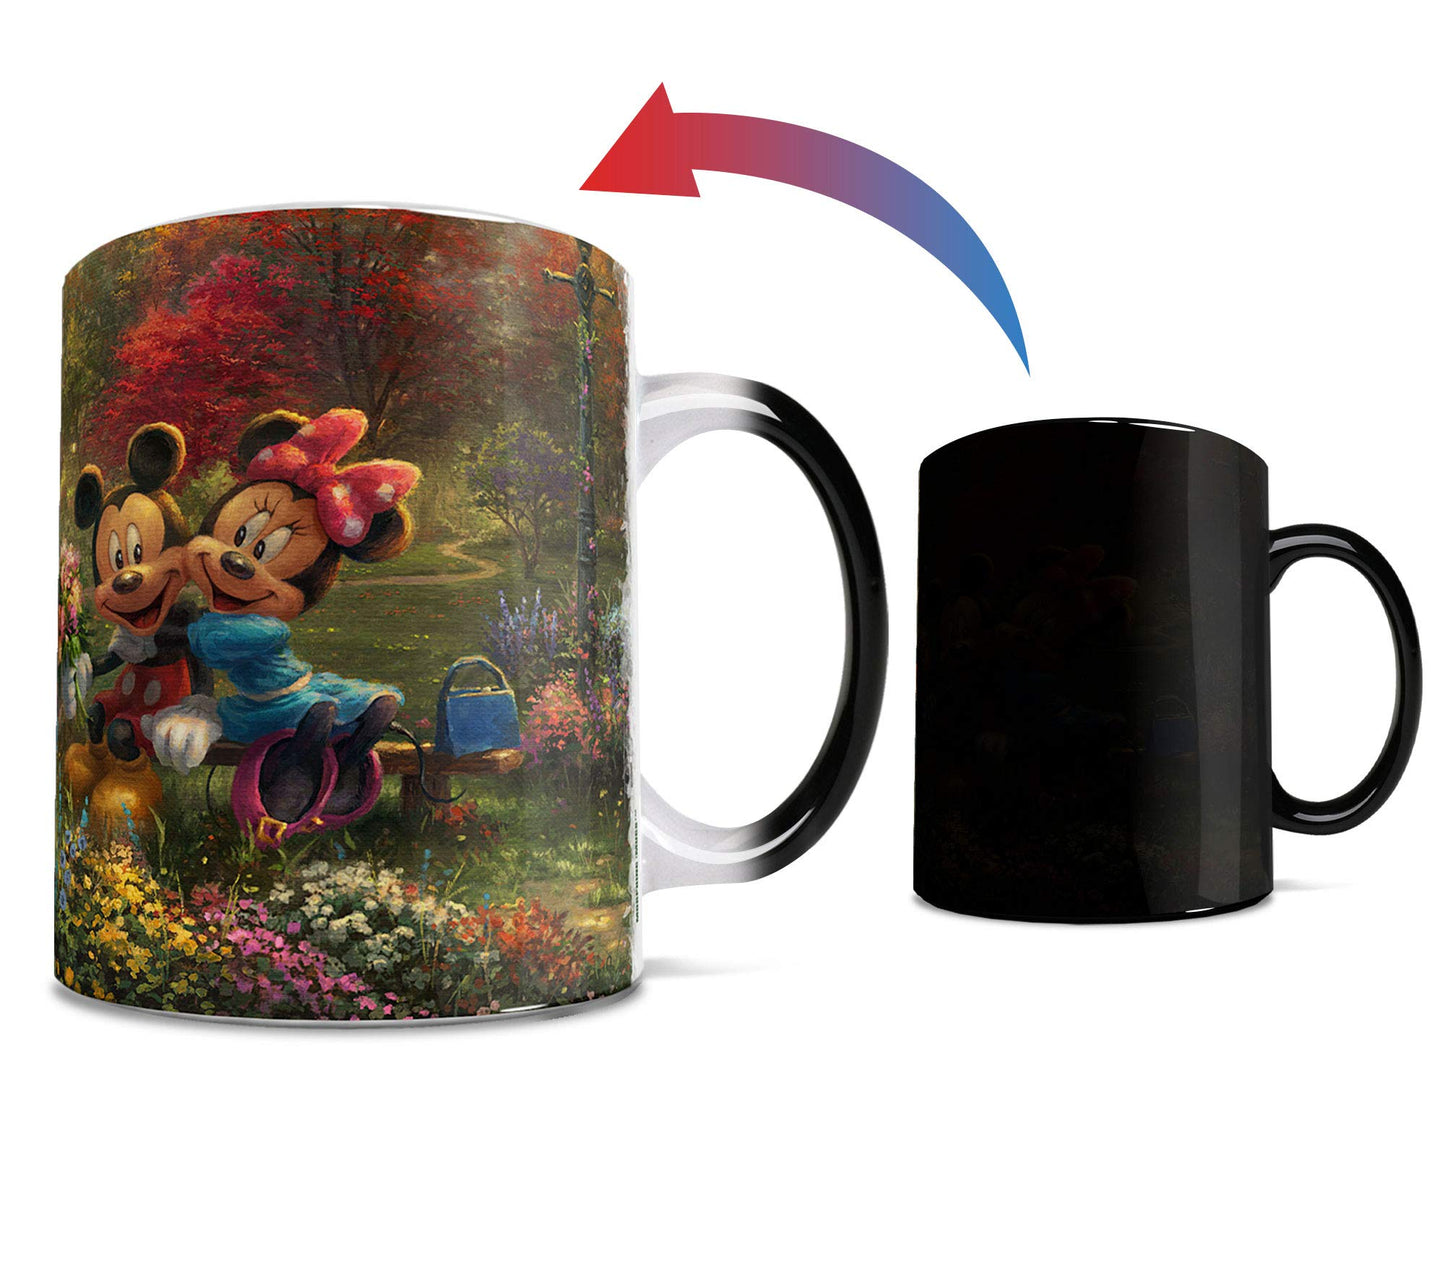 Disney - Mickey and Minnie - Travel - Morphing Mugs Heat Sensitive Mug – Image revealed when HOT liquid is added - 11oz Large Drinkware